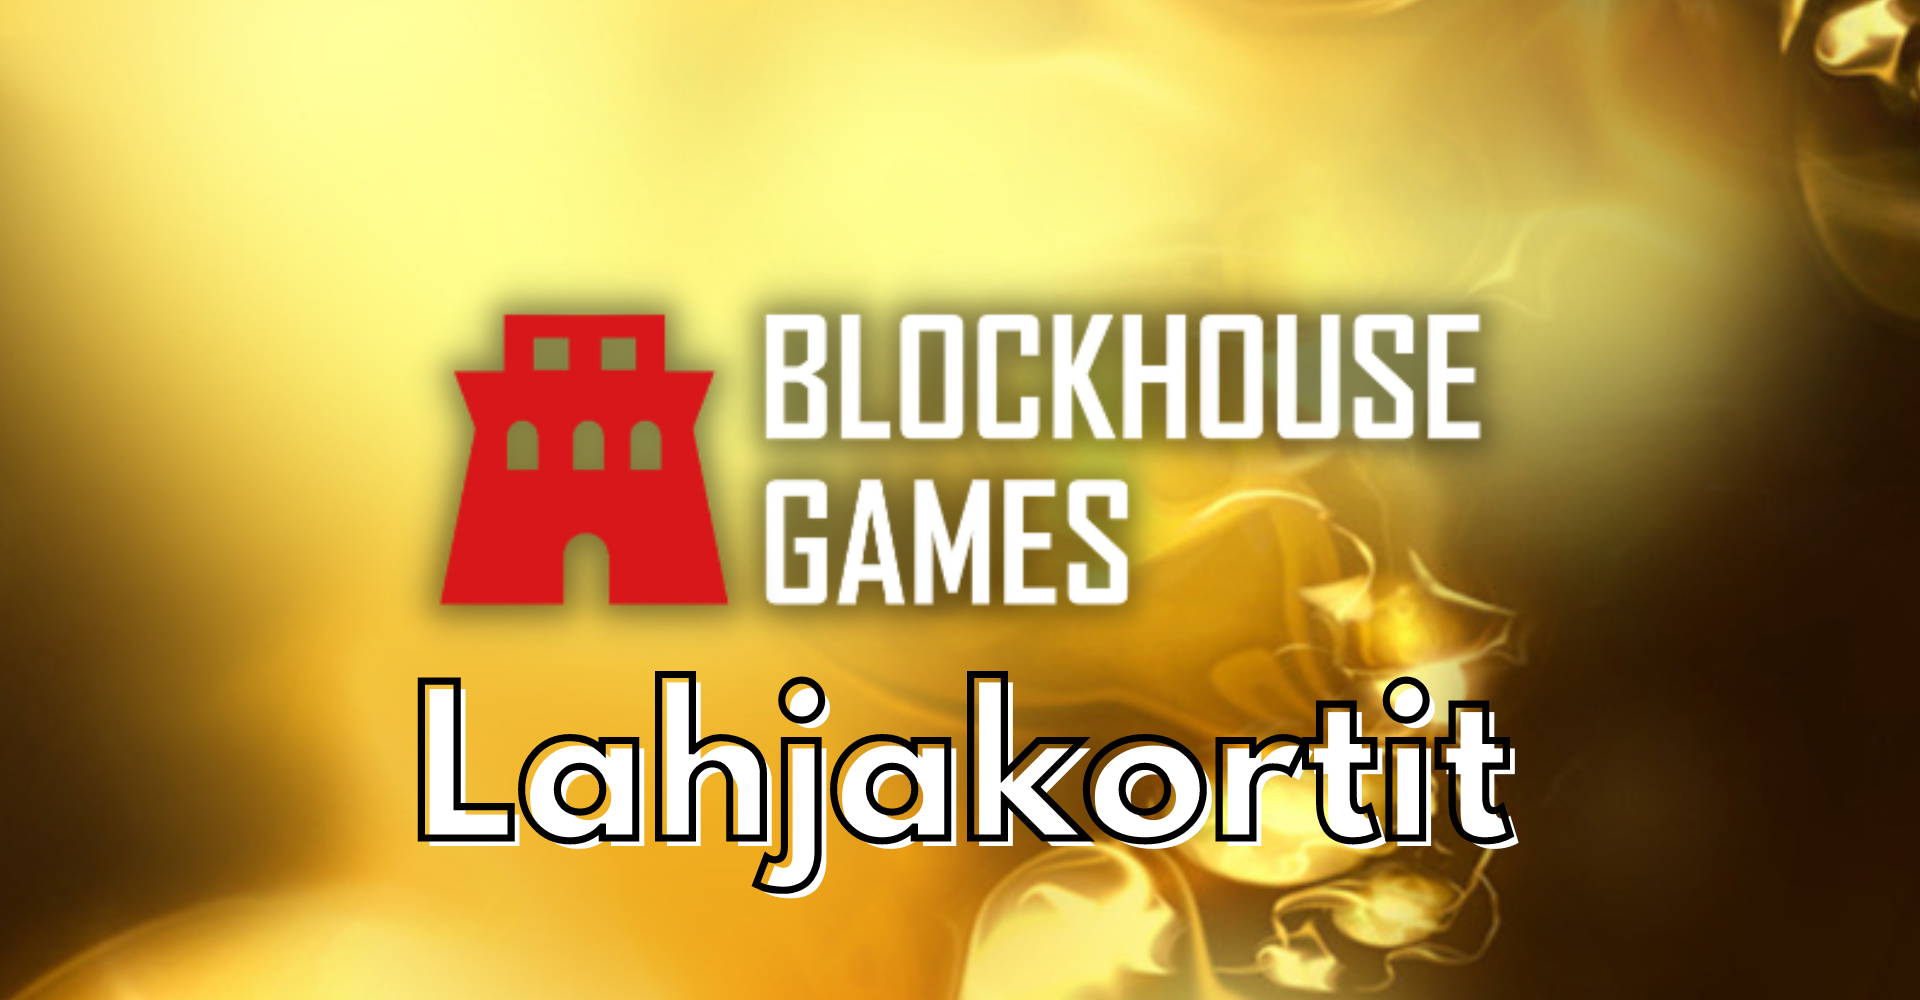 Blockhouse Games Lahjakortit